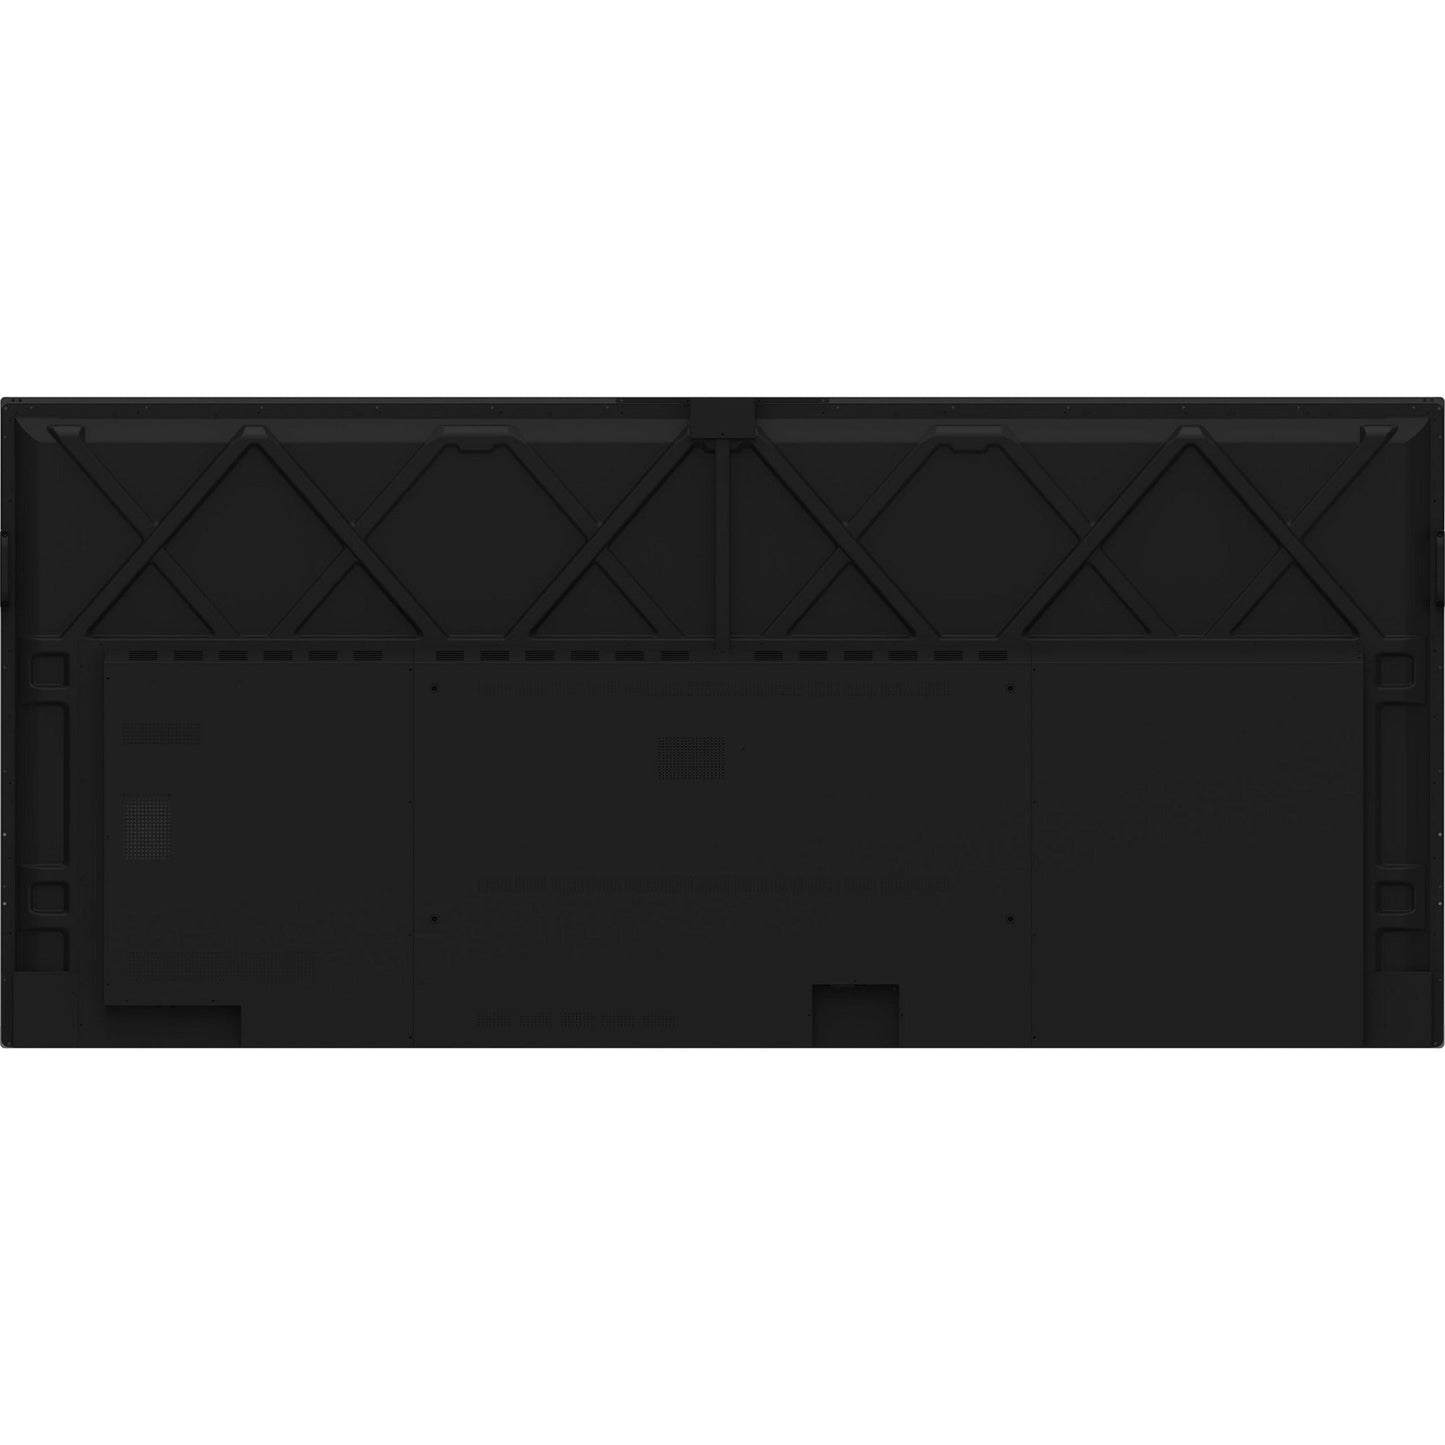 Black Iiyama ProLite TE10518UWI-B1AG 105" PureTouch-IR+ Touch Screen 4K 24/7 Large Format Display with Android, Wifi & USB-C